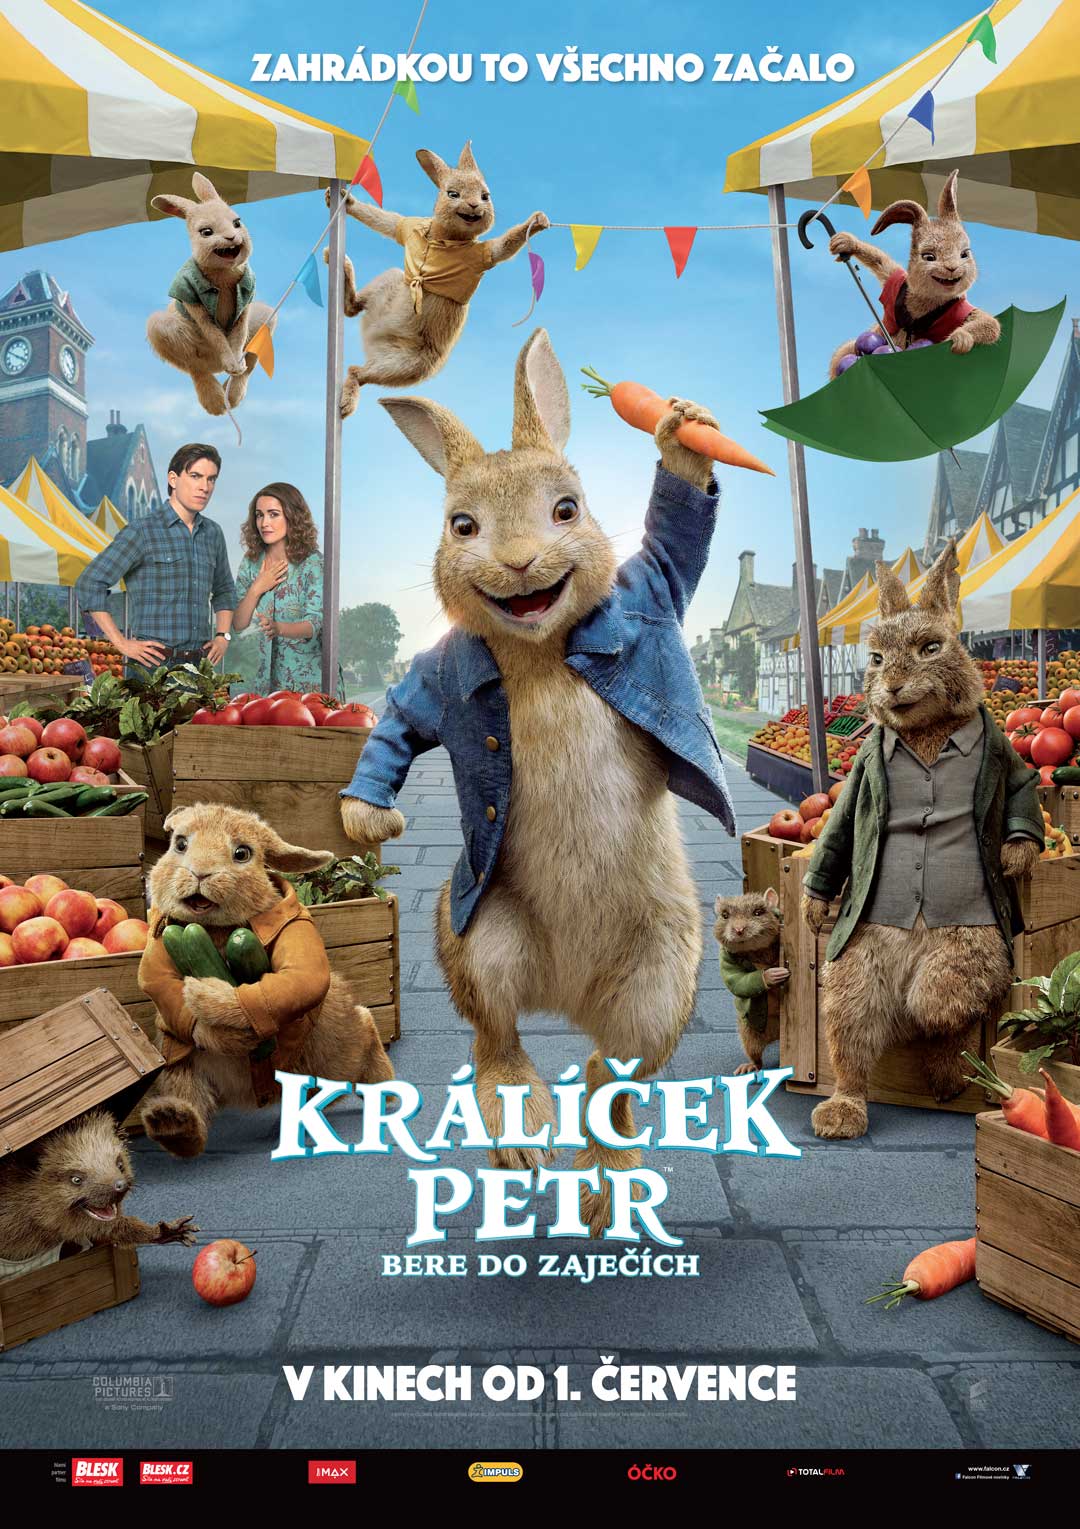 Stiahni si Filmy CZ/SK dabing  Kralicek Petr bere do zajecich / Peter Rabbit 2: The Runaway (2021)(CZ/SK)[1080p] = CSFD 56%